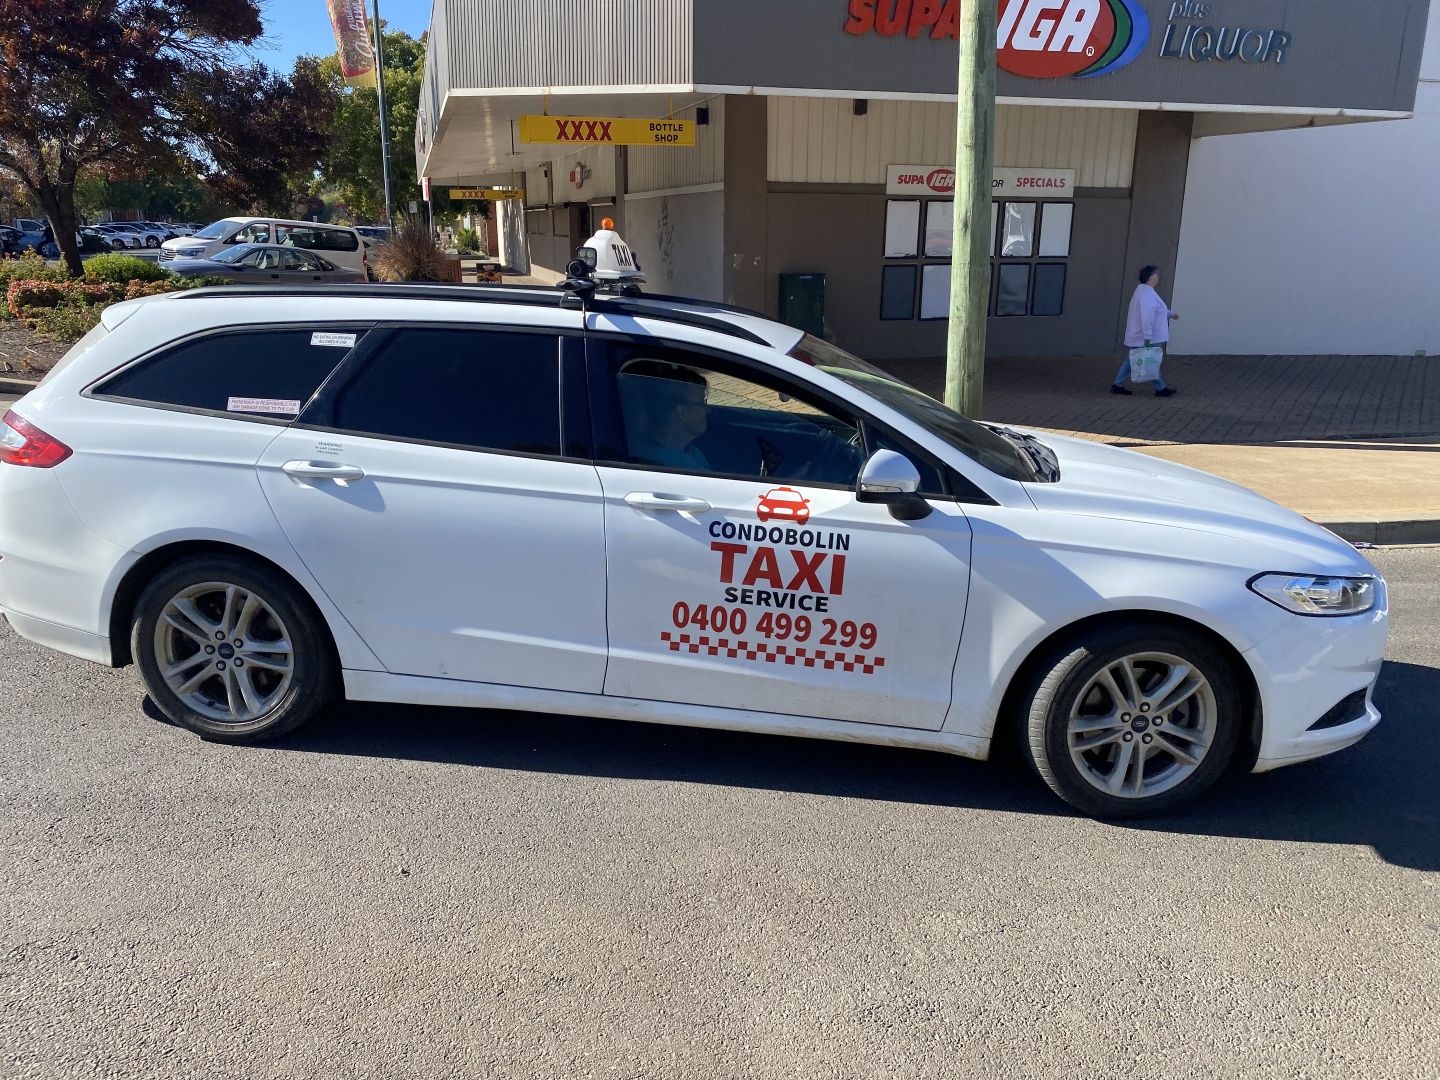 Condo Taxis Business For Sale, Condobolin NSW 2877, Image 1